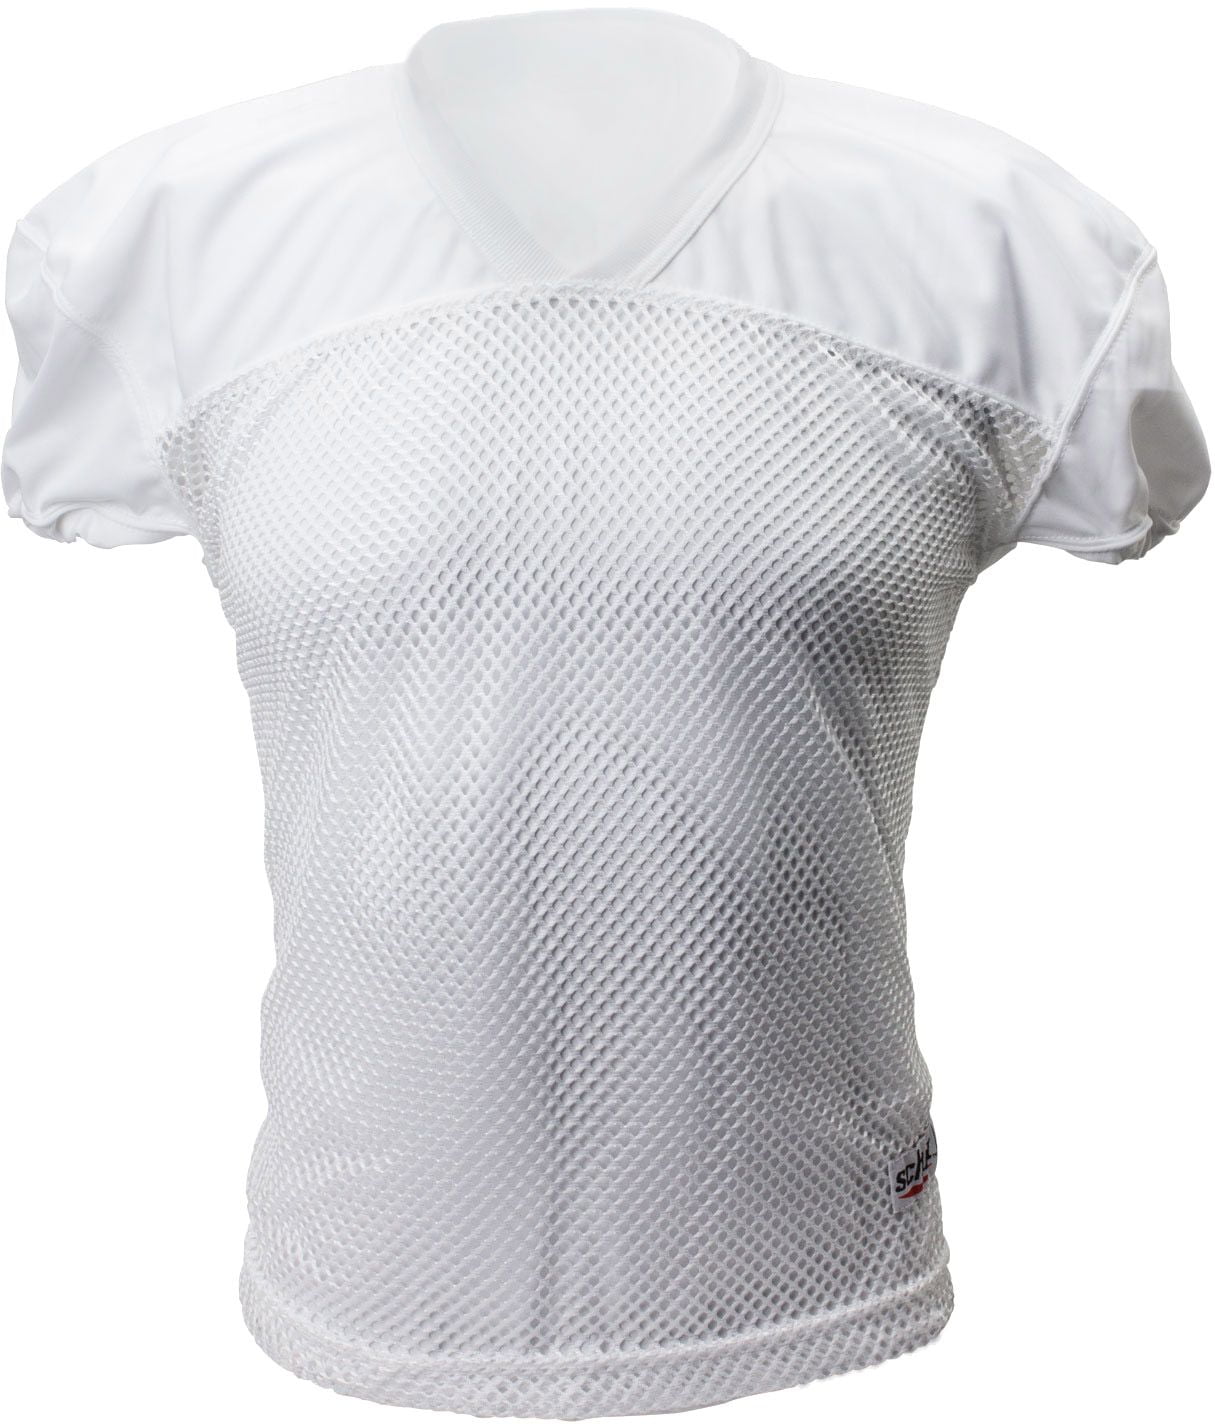 plain white football jersey